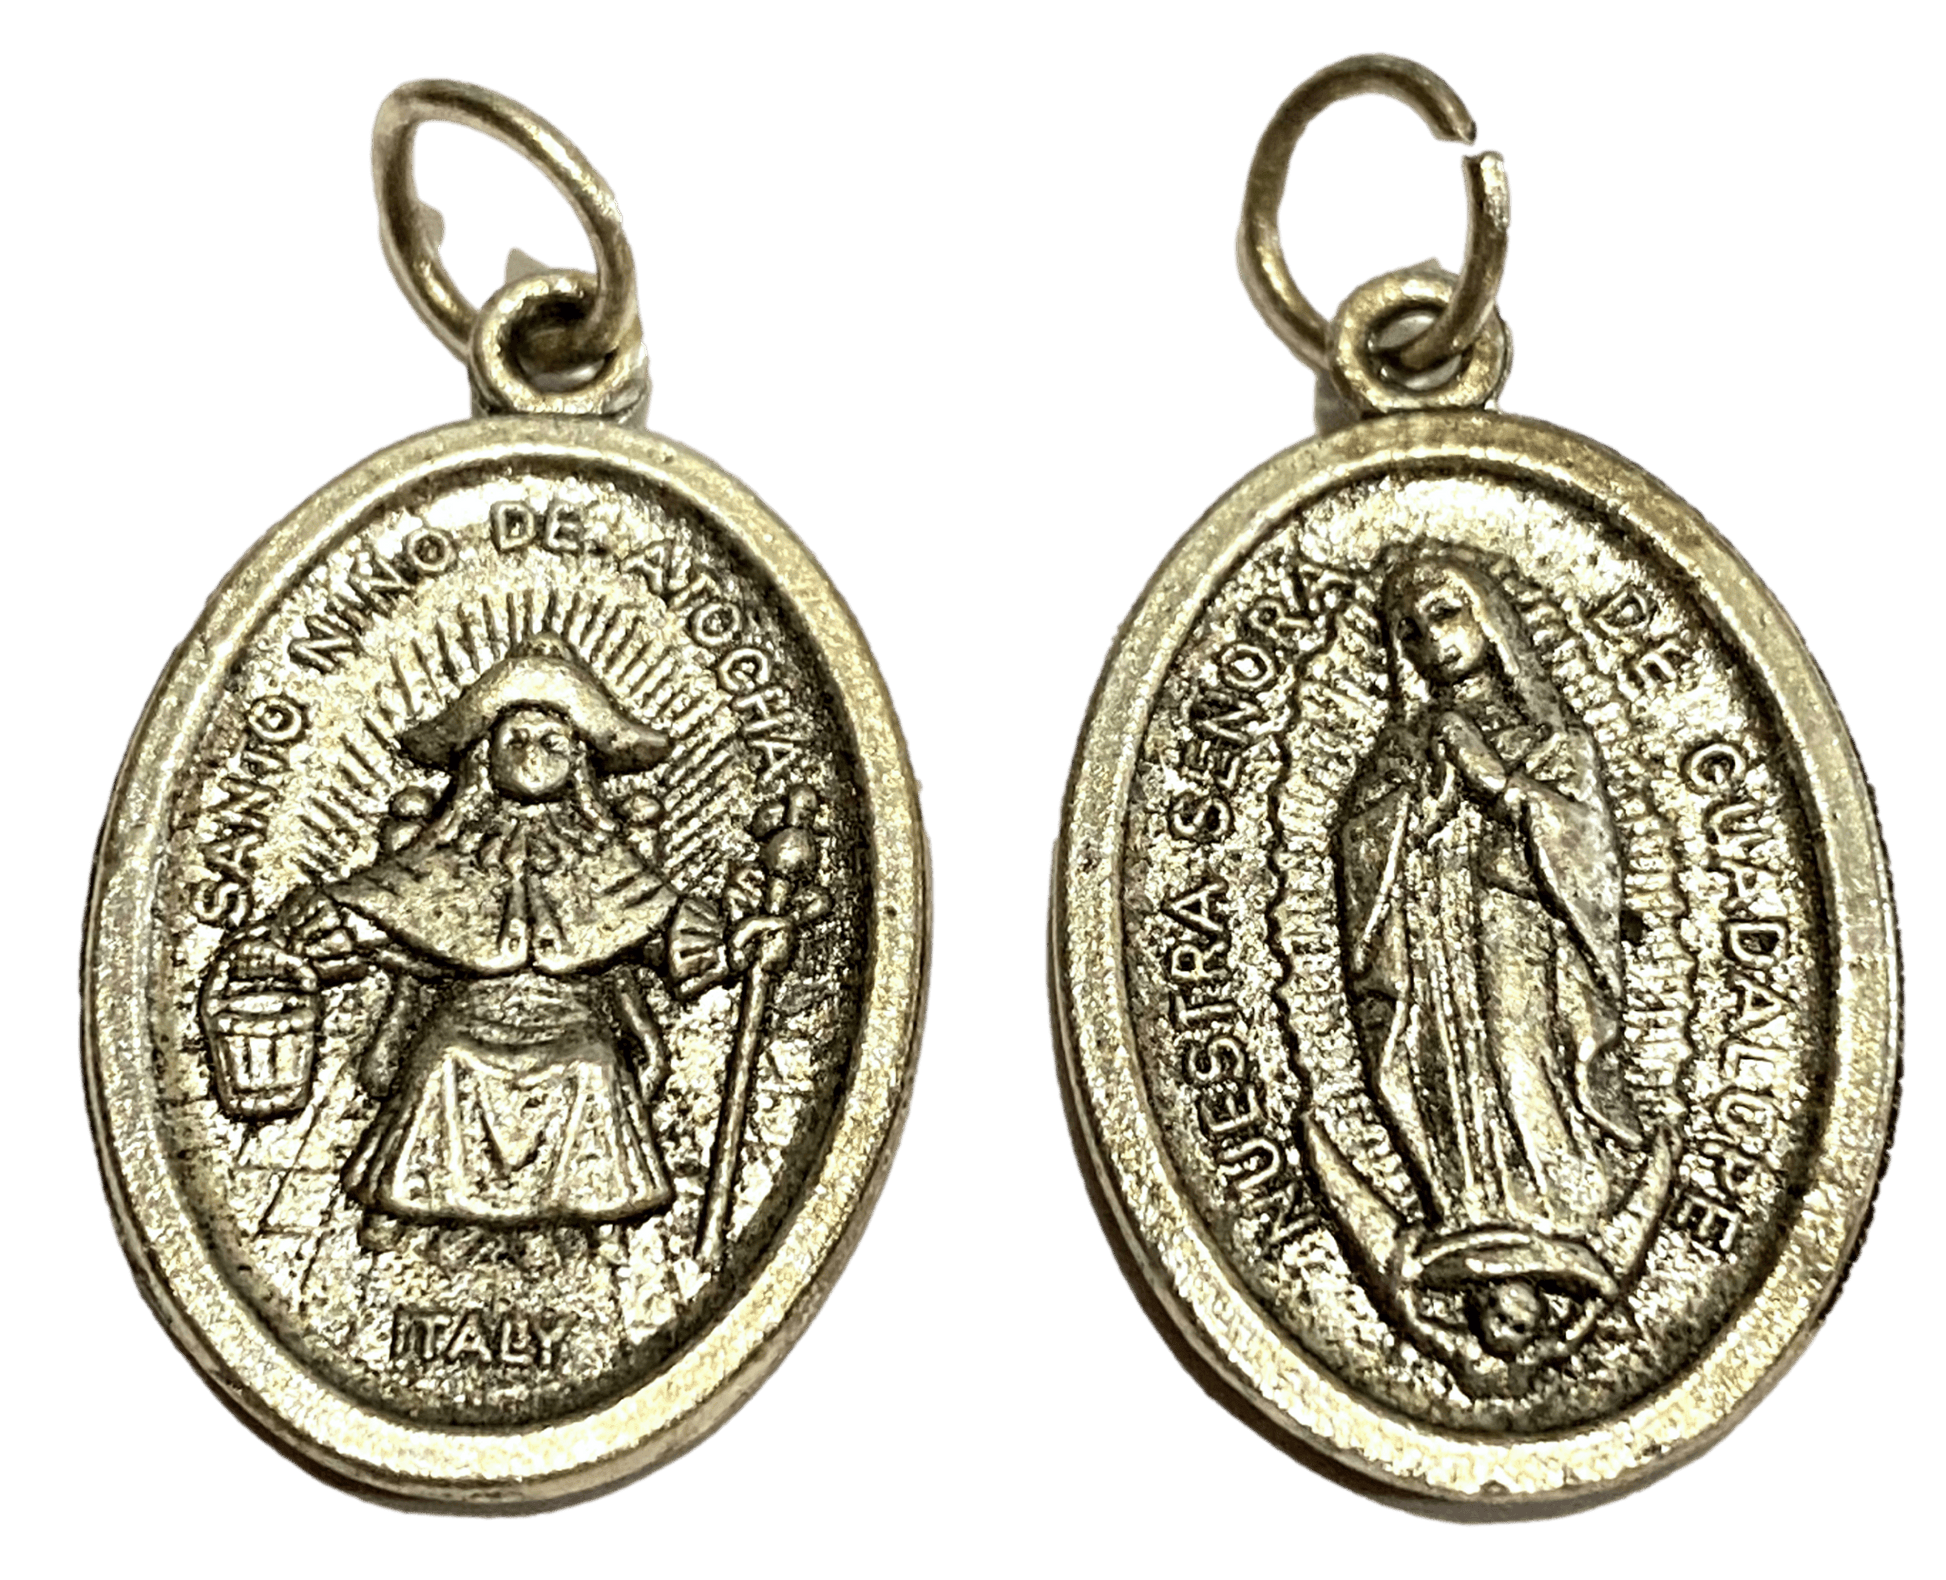 Medal Opaque Santo Nino De Atocha Nuestra Senora De Guadalupe Italian Double-Sided Silver Oxidized Metal Alloy 1 inch - Ysleta Mission Gift Shop- VOTED El Paso's Best Gift Shop